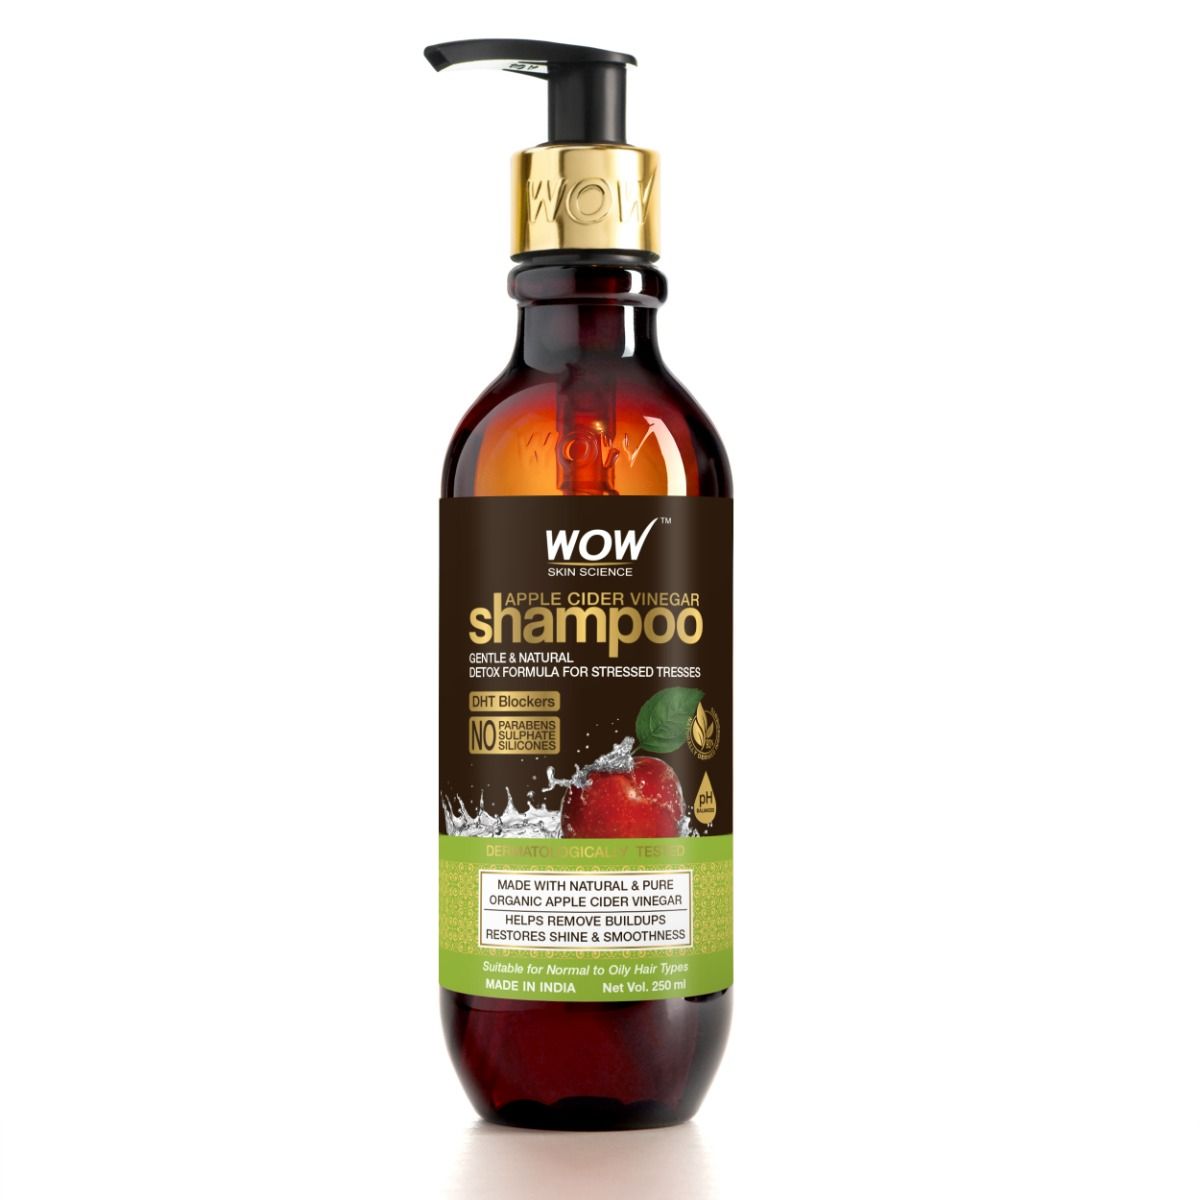 Wow Skin Science Apple Cider Vinegar Shampoo, 250 ml, Pack of 1 